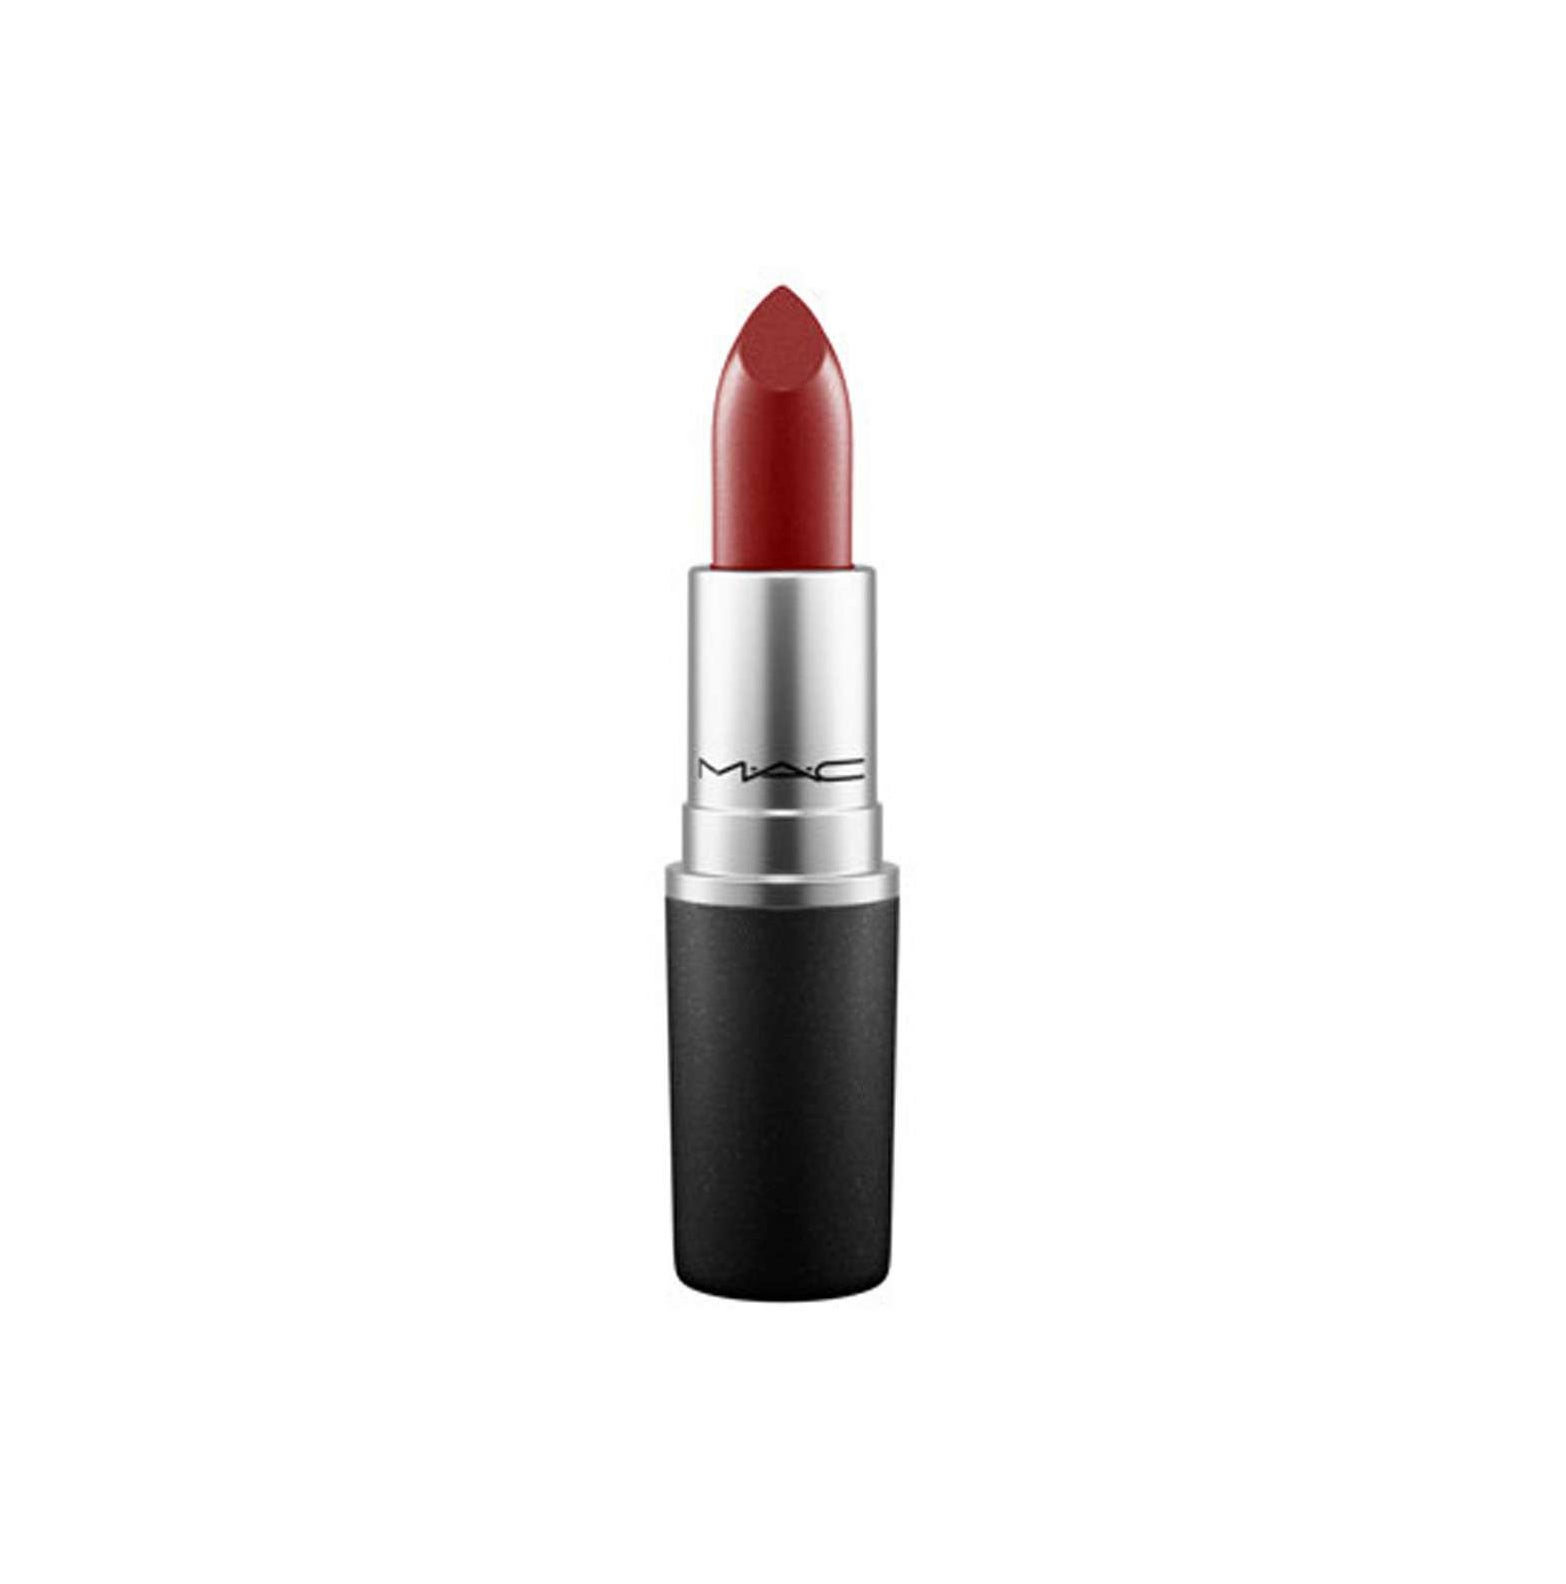 MAC Is Giving Away Free Lipstick
